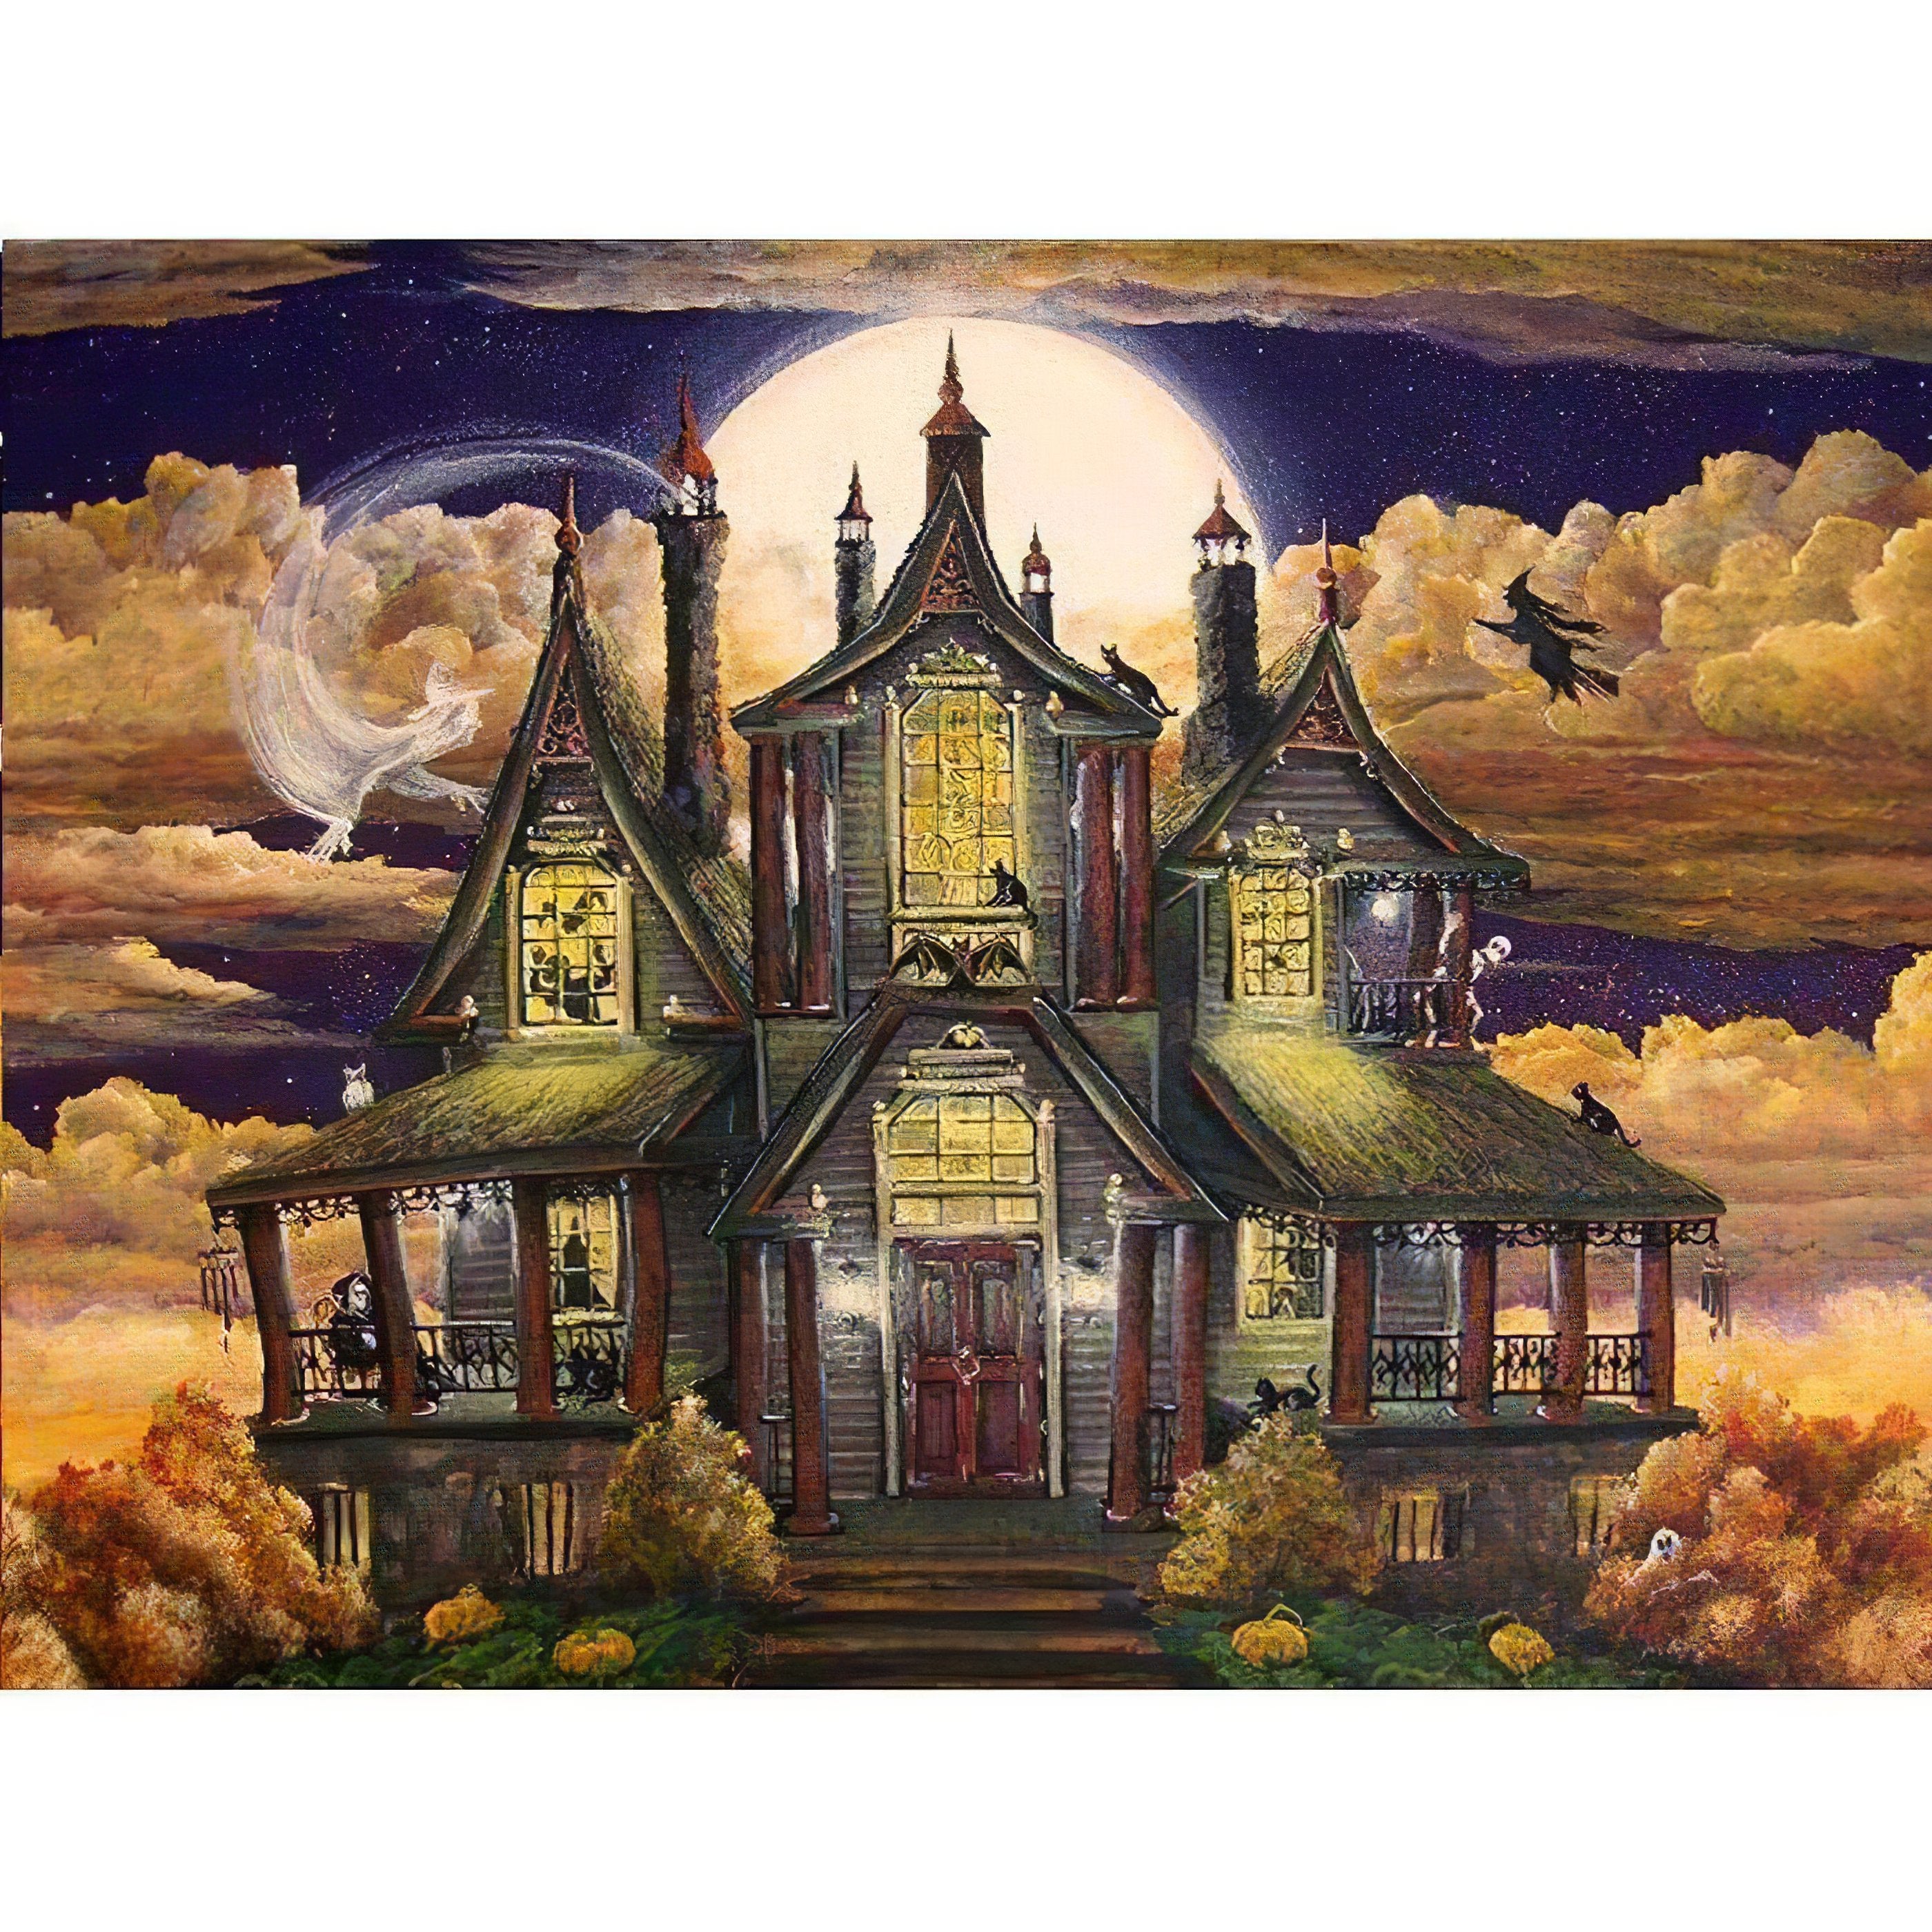 House Of Halloween